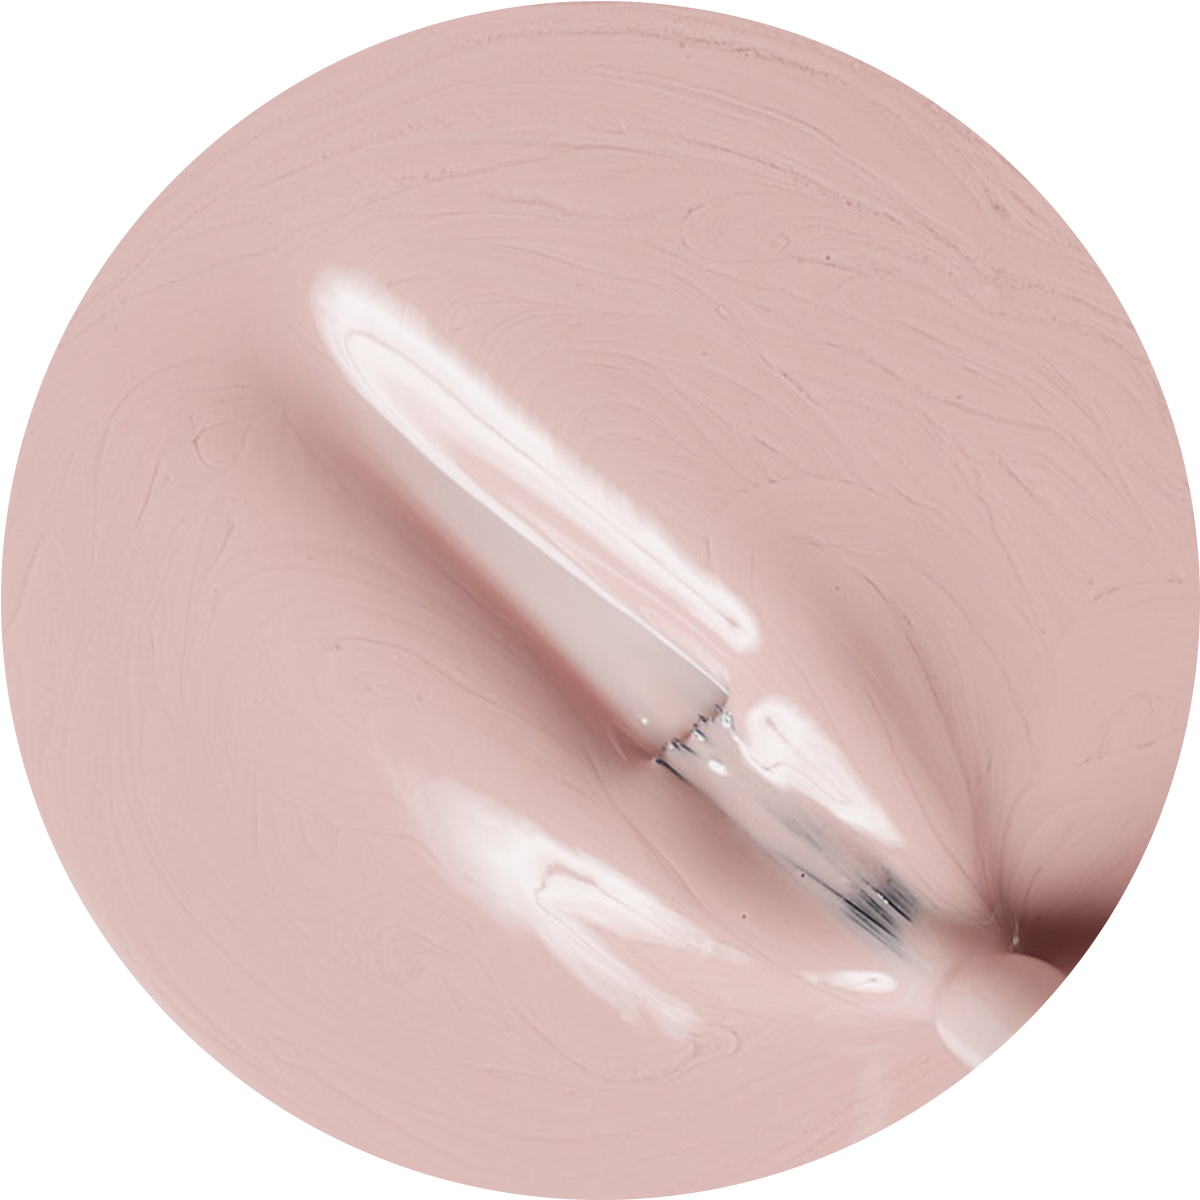 closeup paint swatch of light pink nail polish